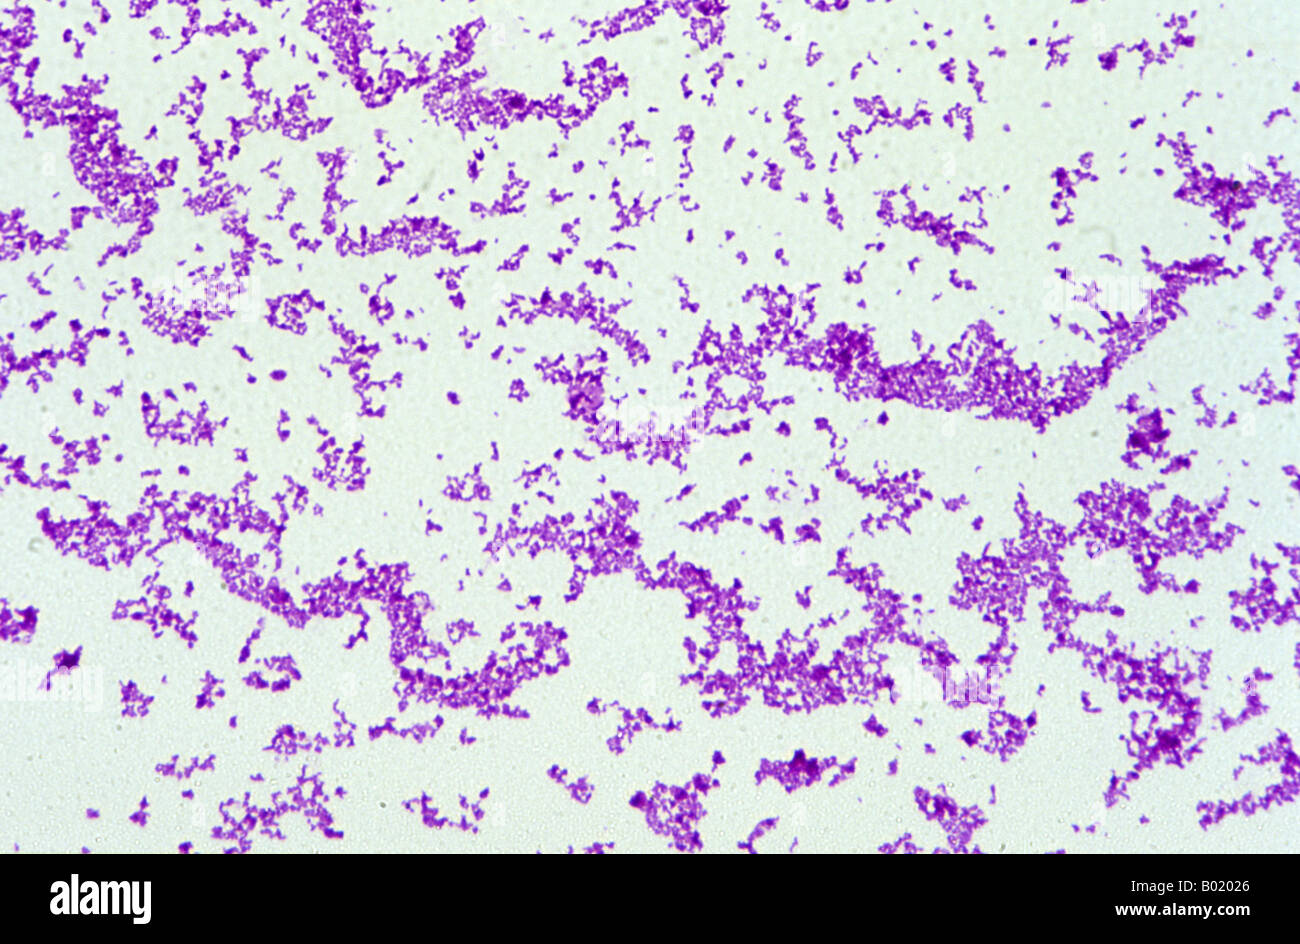 Corynebacterium diphtheriae bacteria Stock Photo: 17254334 - Alamy